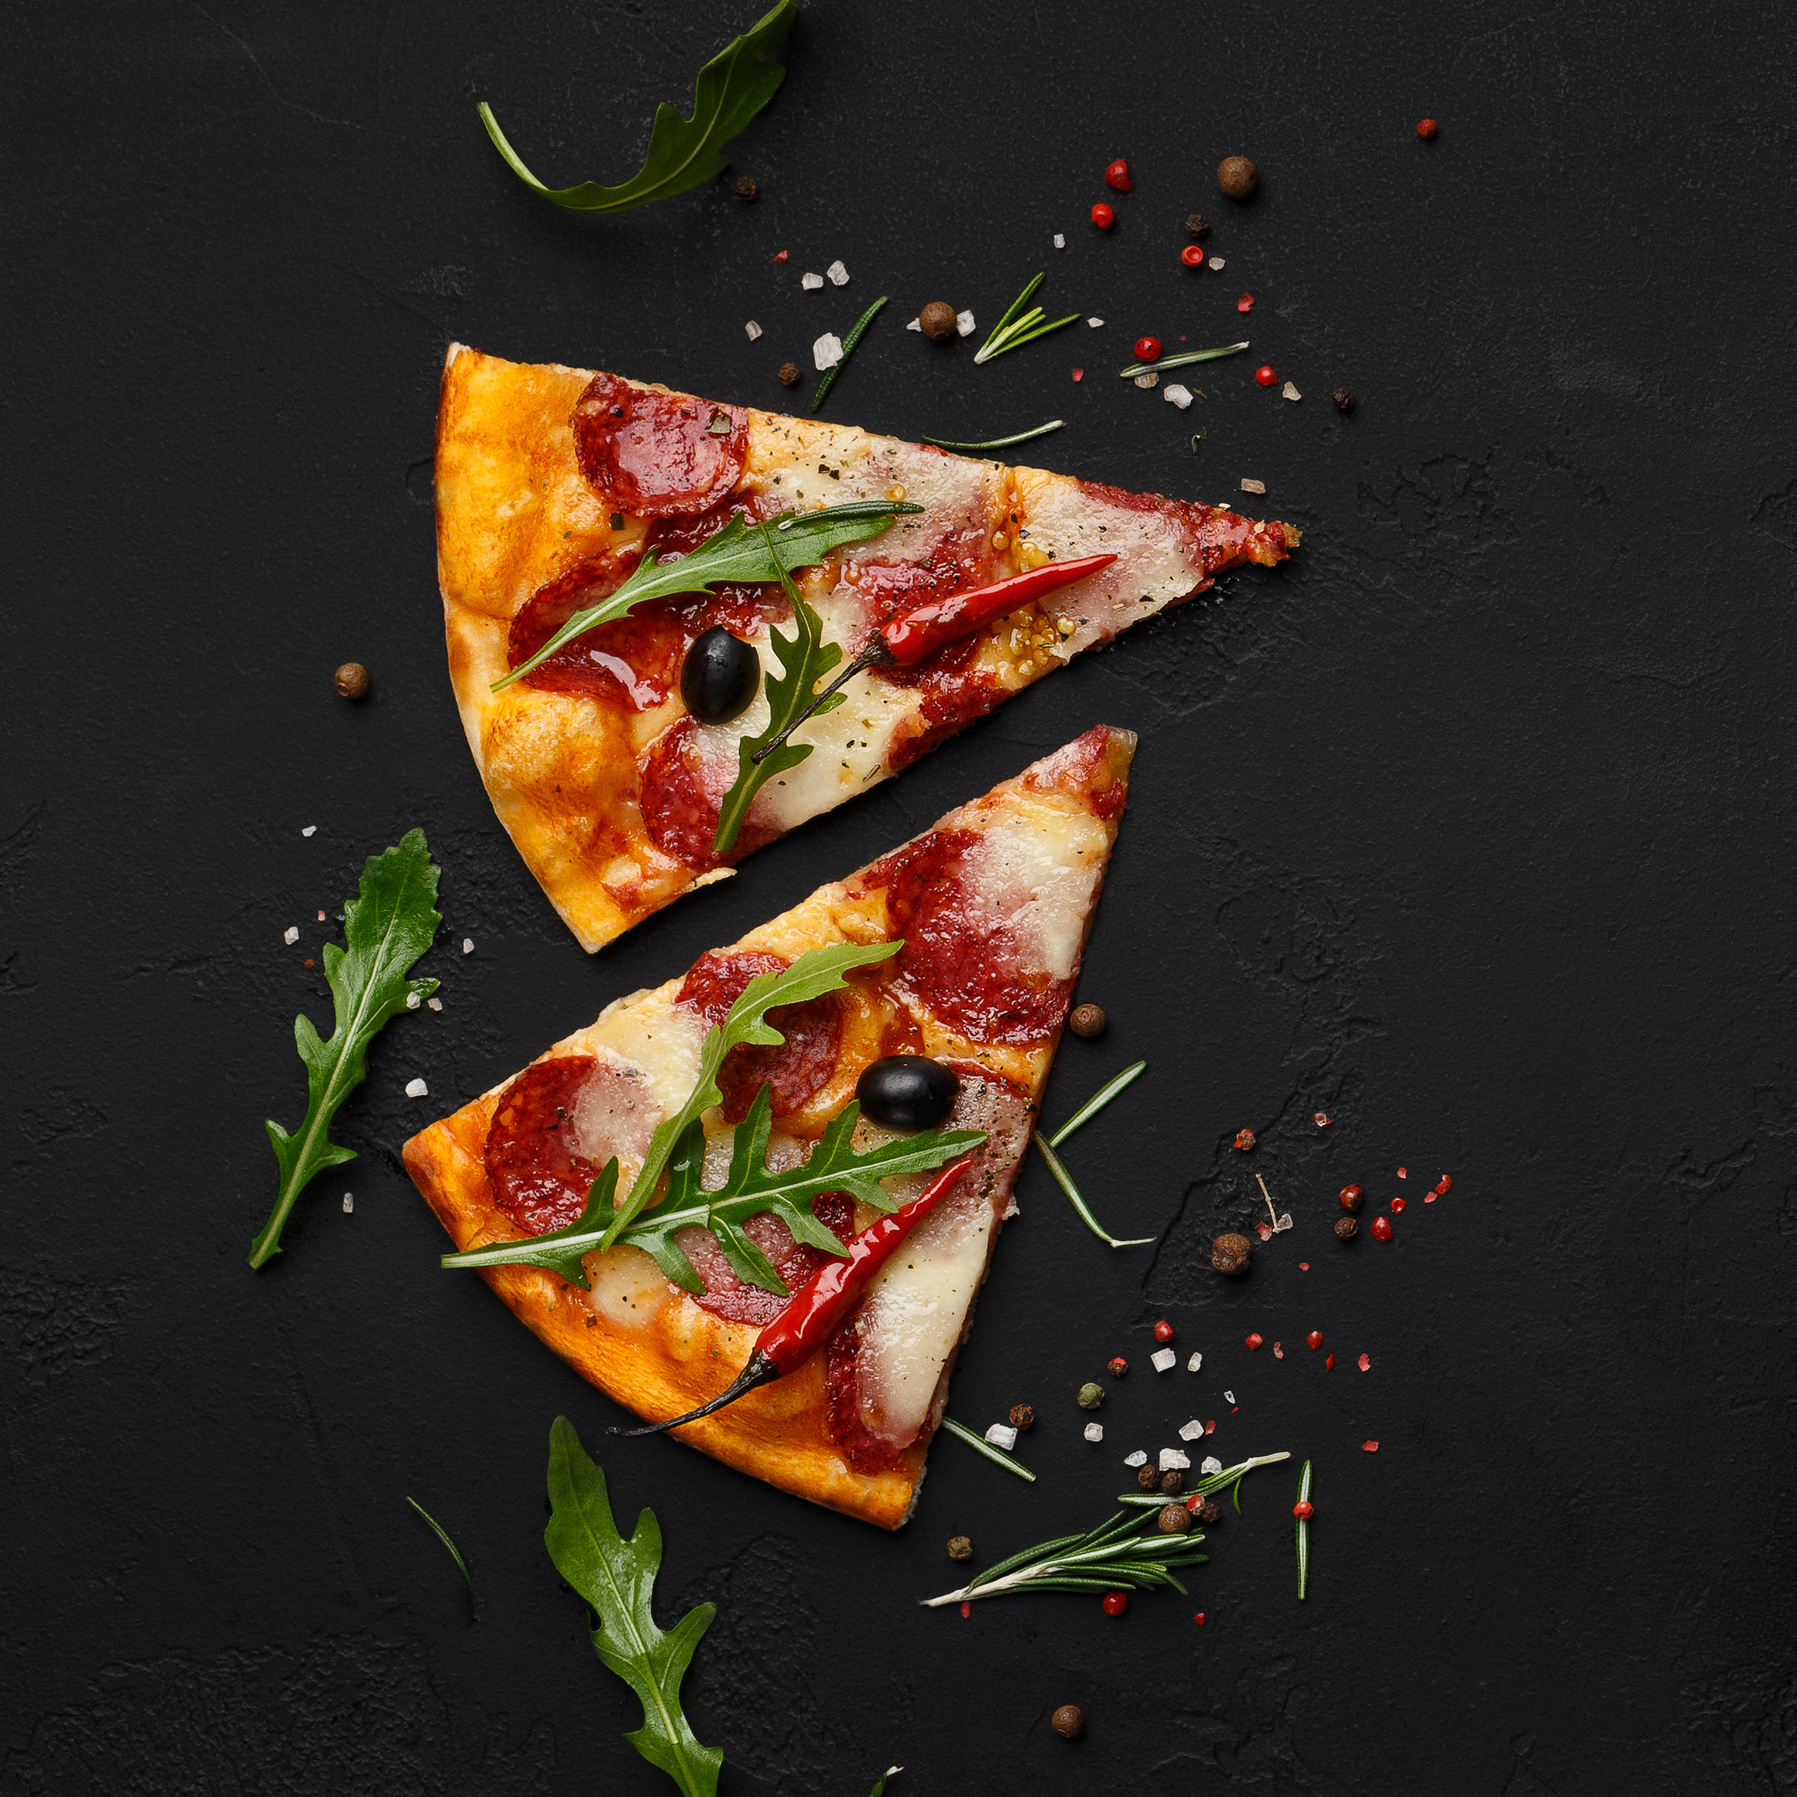 Pizza slices with rocket salad on black background